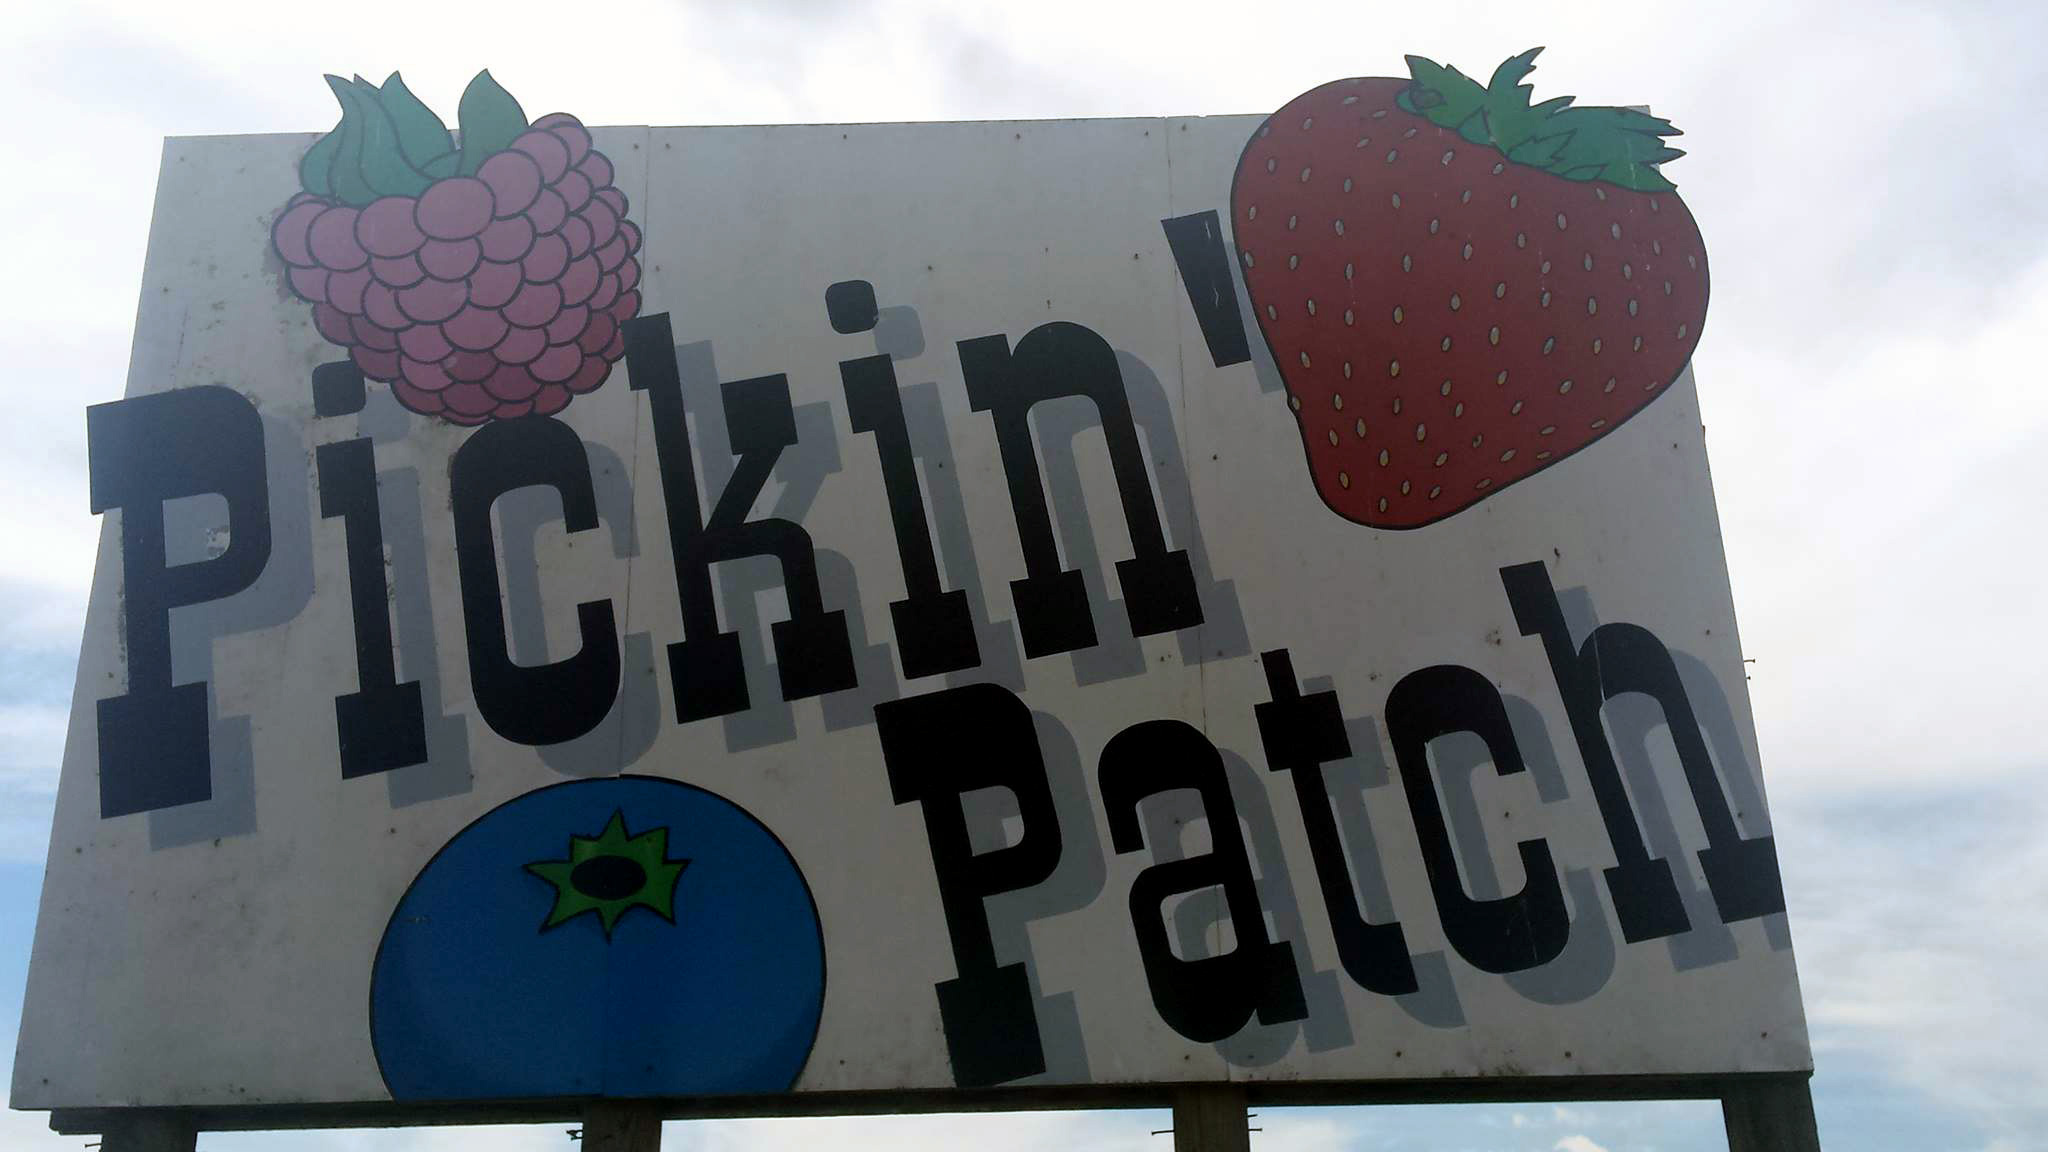 Pickin Patch